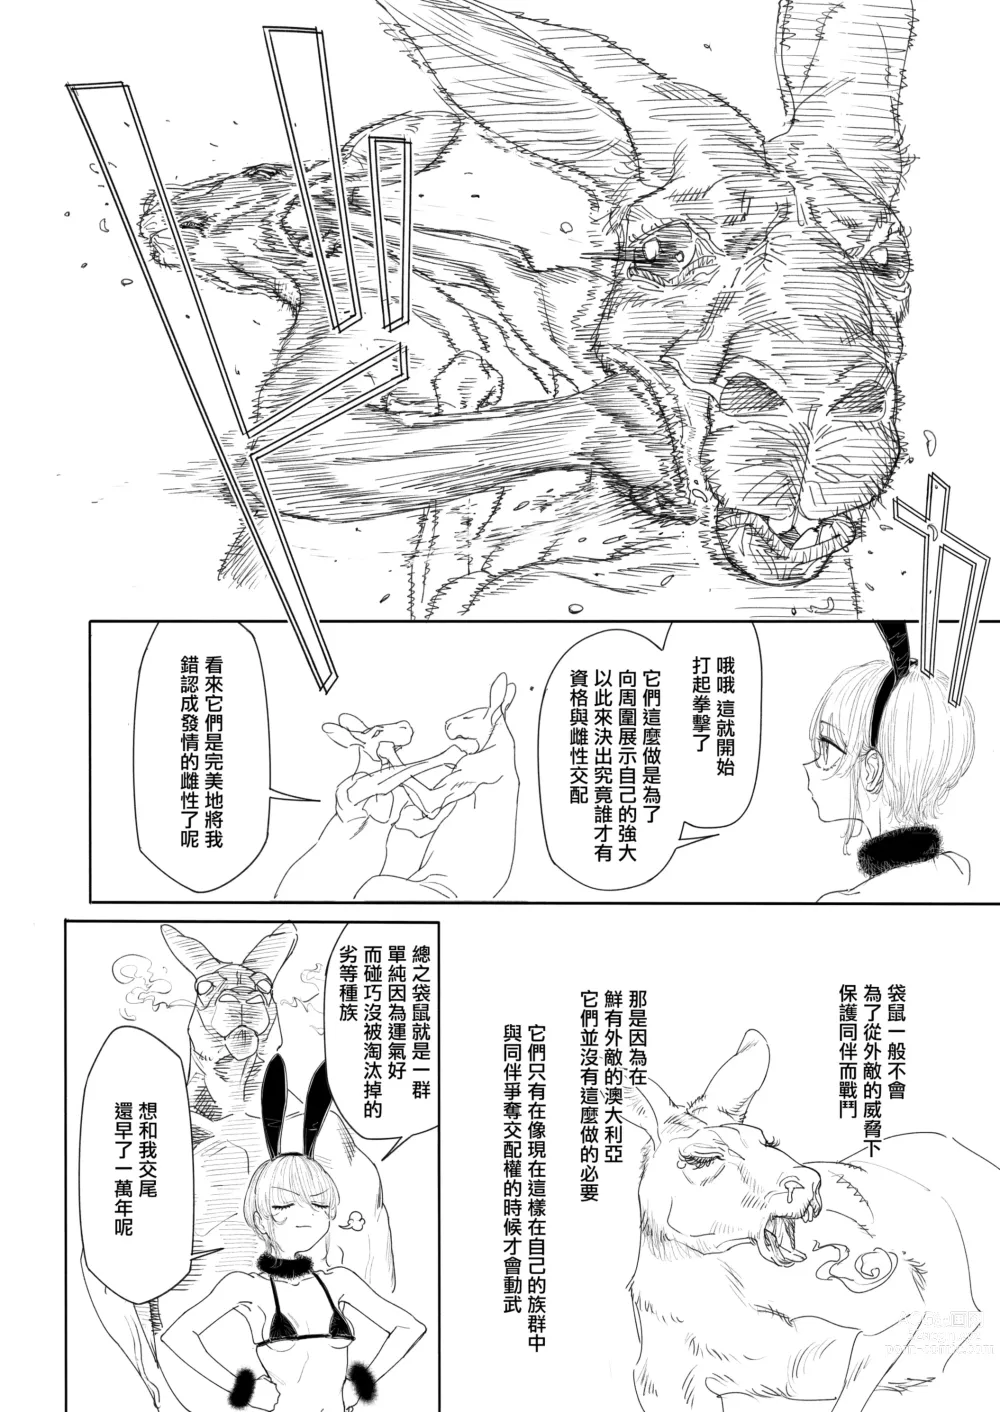 Page 5 of doujinshi Kangaroo no Kimochi Ii